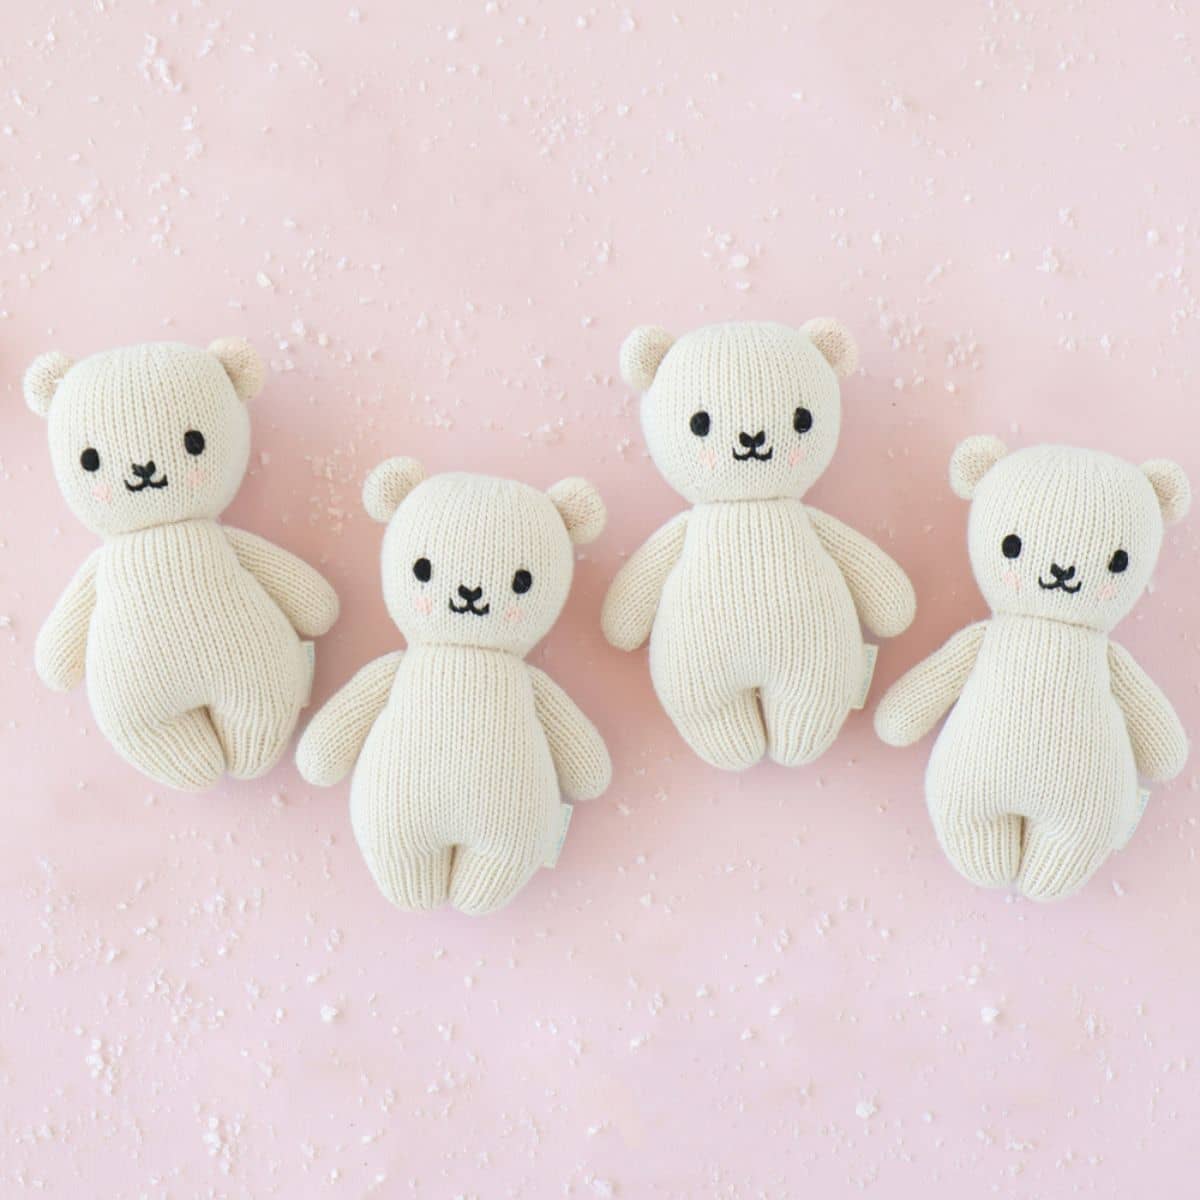 Cuddle + Kind Hand-Knit Doll - Baby Polar Bear